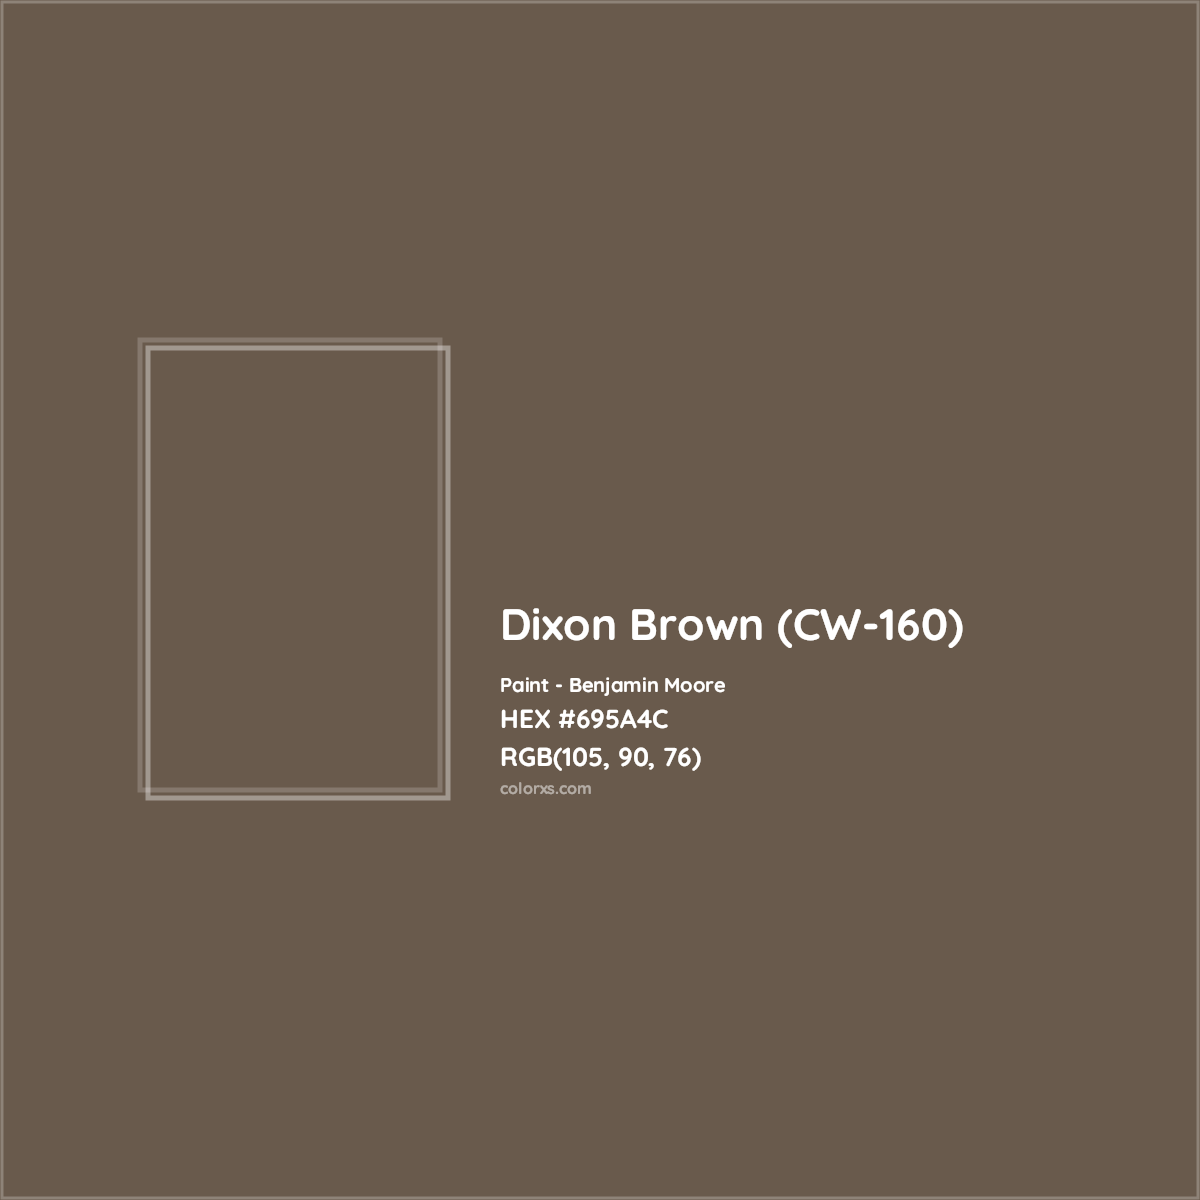 HEX #695A4C Dixon Brown (CW-160) Paint Benjamin Moore - Color Code